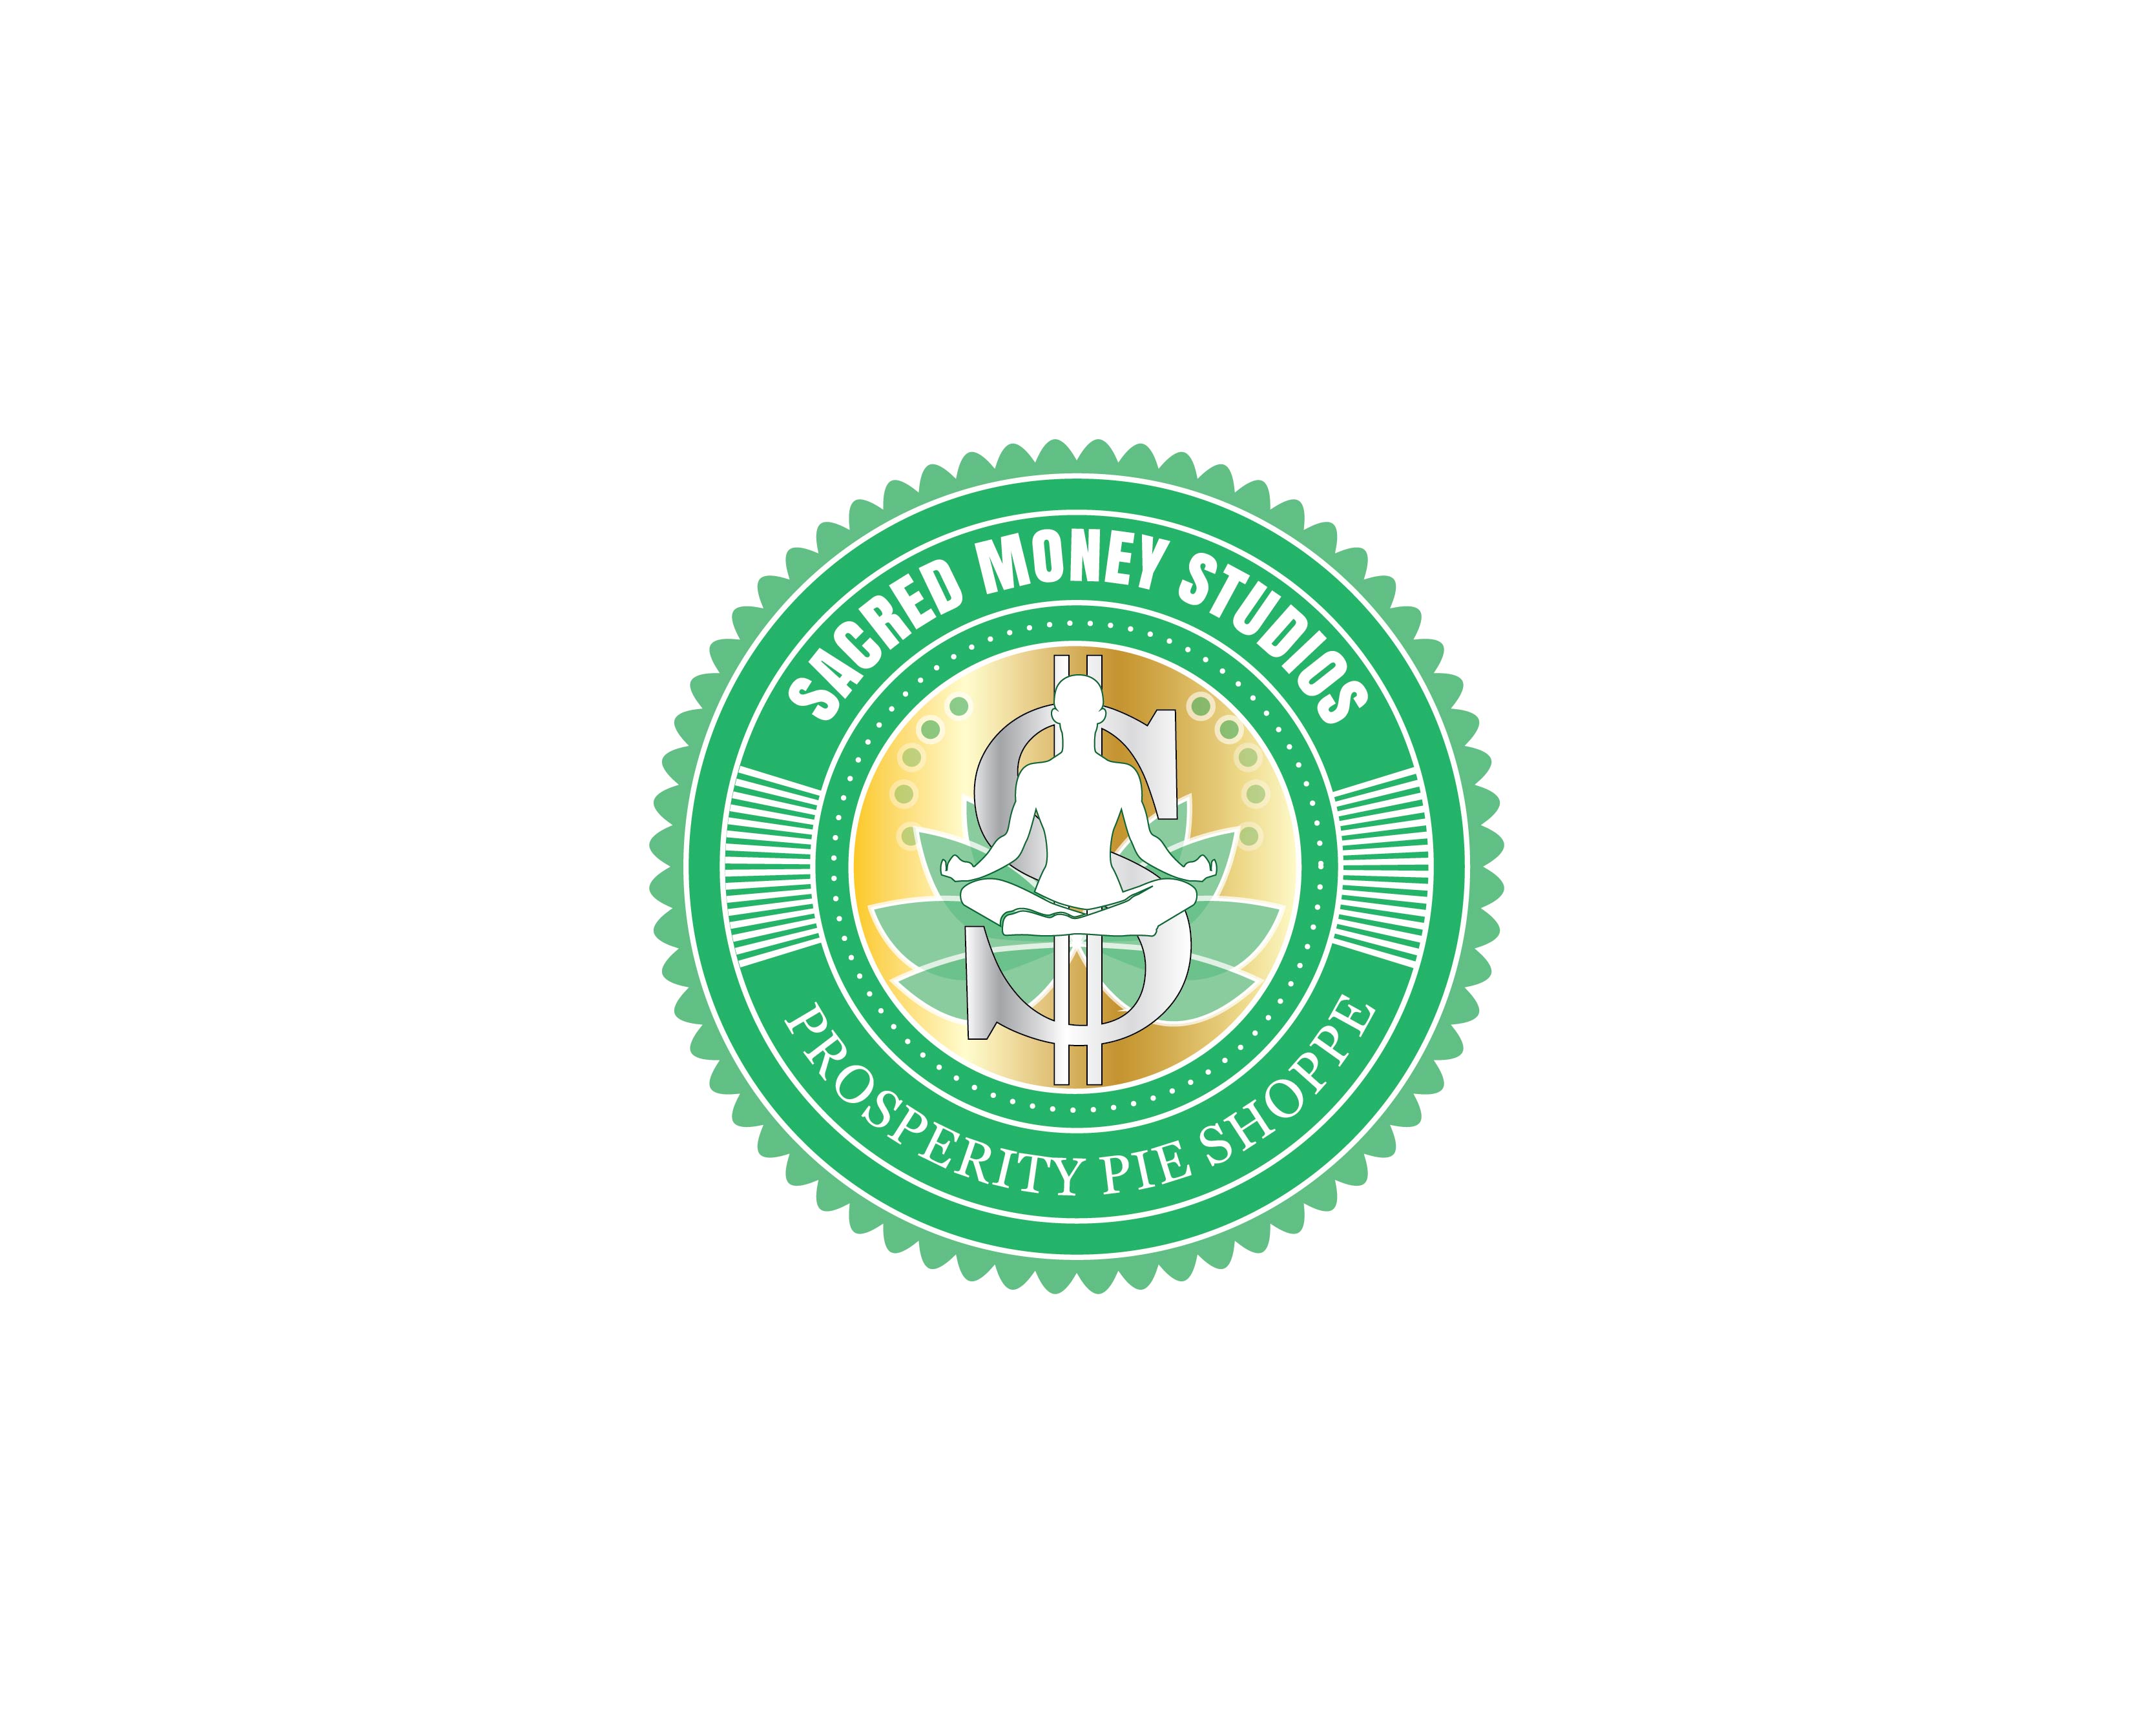 Logo Design entry 1095565 submitted by HAFIZ to the Logo Design for Sacred Money Studios (TM)/Prosperity Pie Shoppe run by Sacredmoneystudios@gmail.com